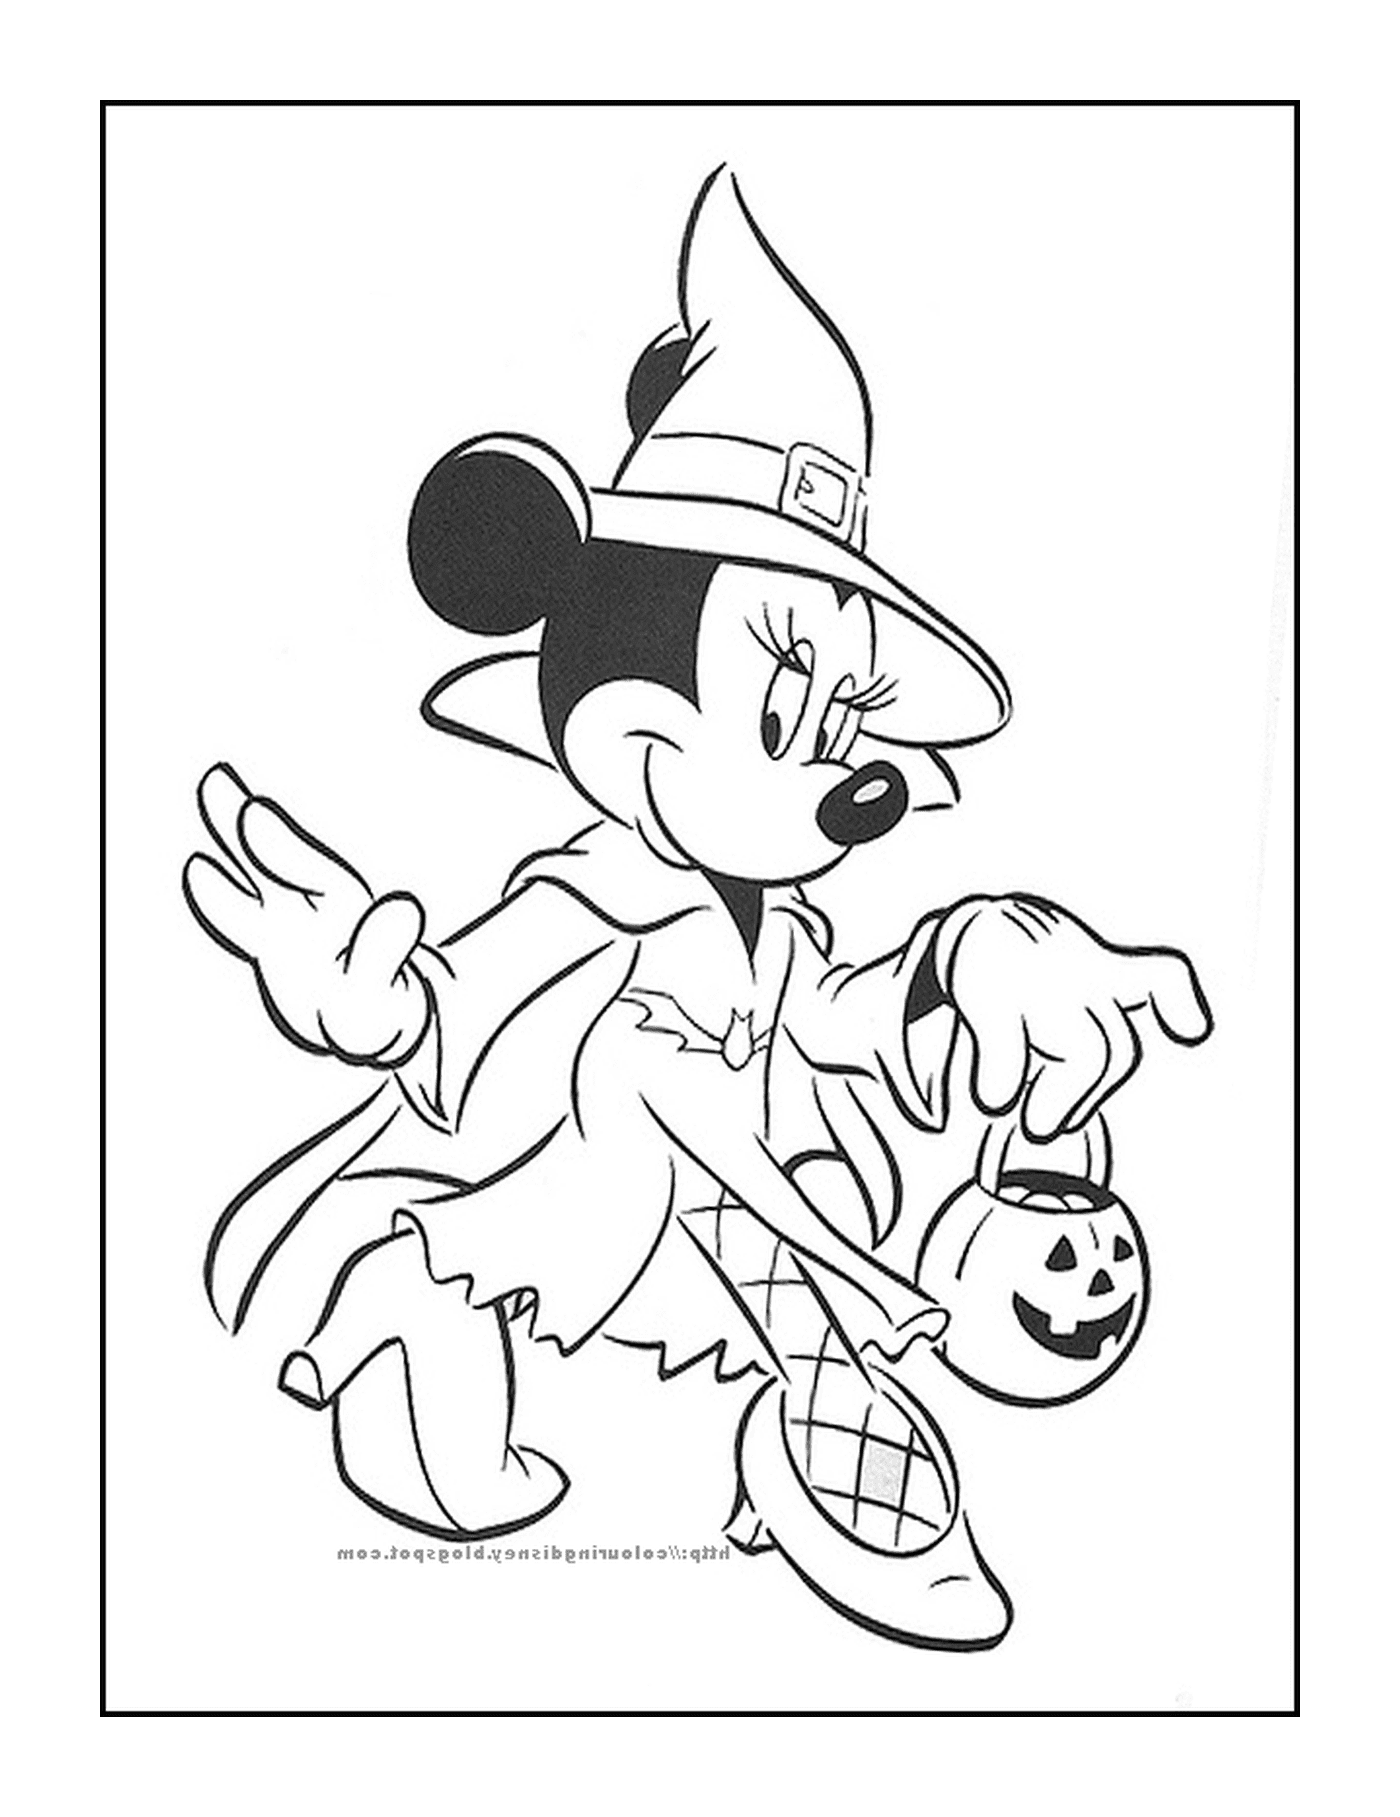  Minnie Mouse disfrazada de bruja para Halloween 